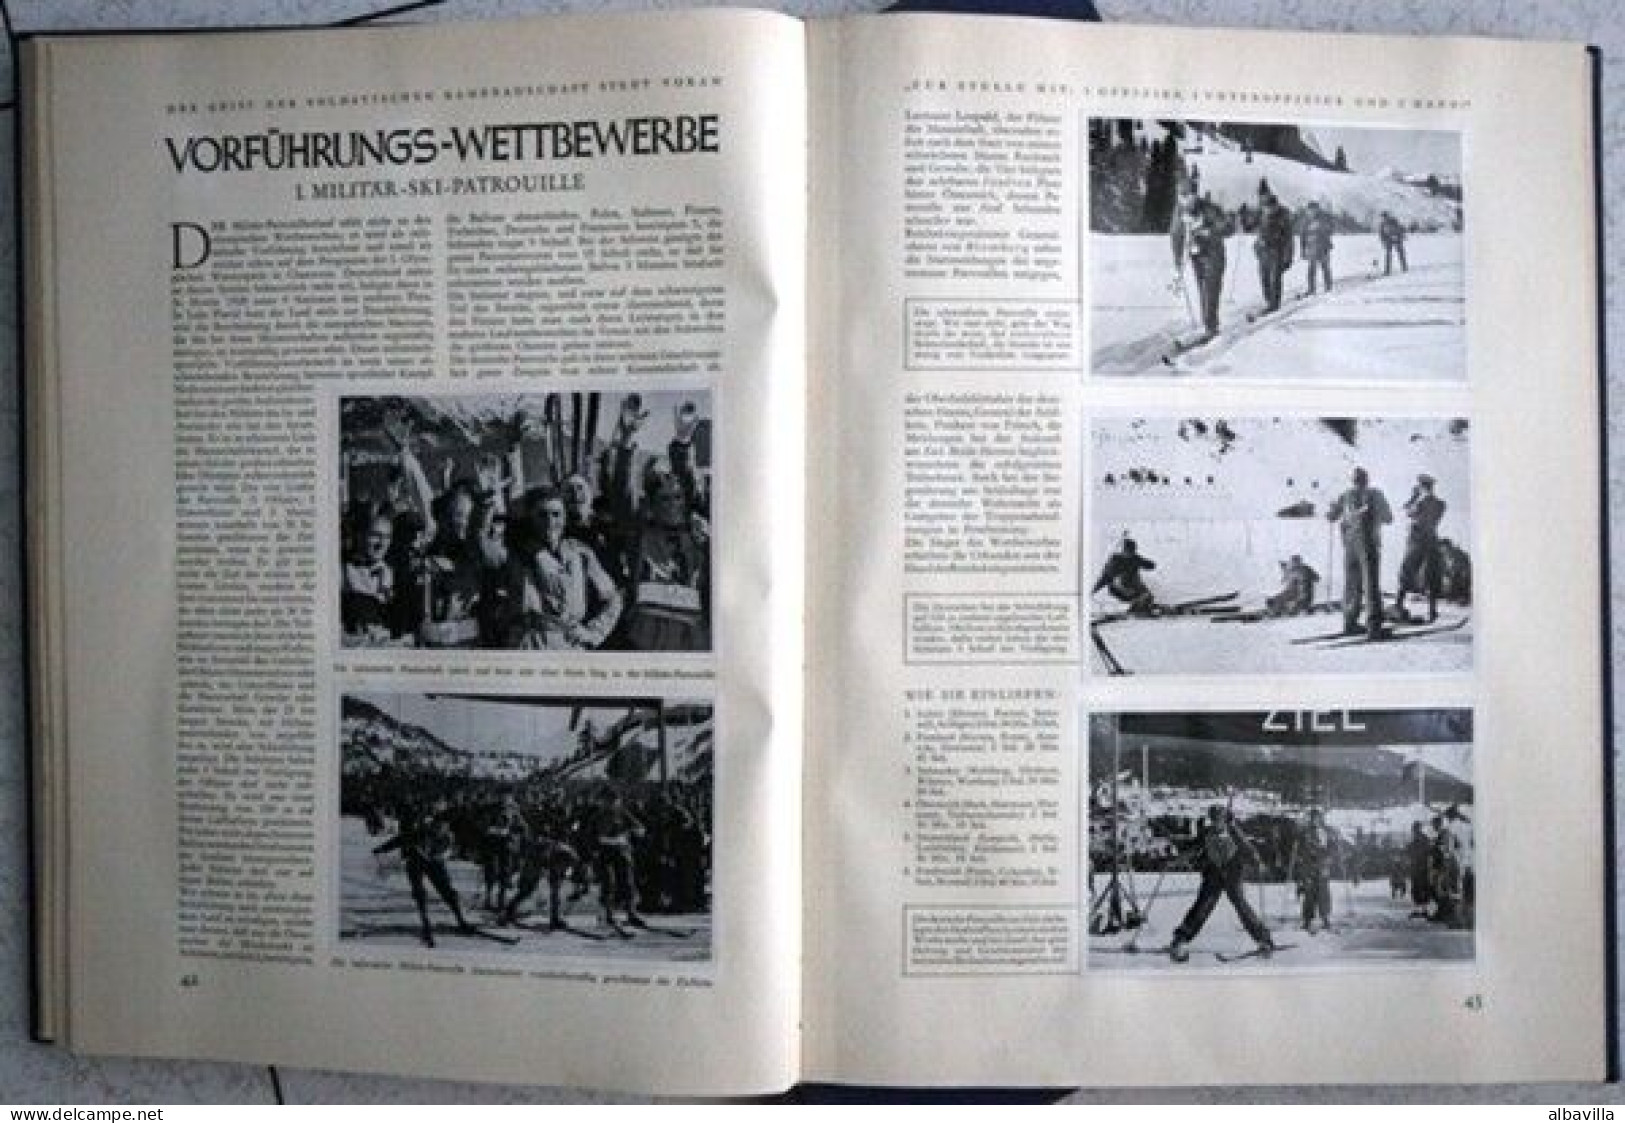 Germania 1936 Olimpiadi Invernali E Estive 2 Volumi Con Dedica Di Un'atleta - Livres Dédicacés